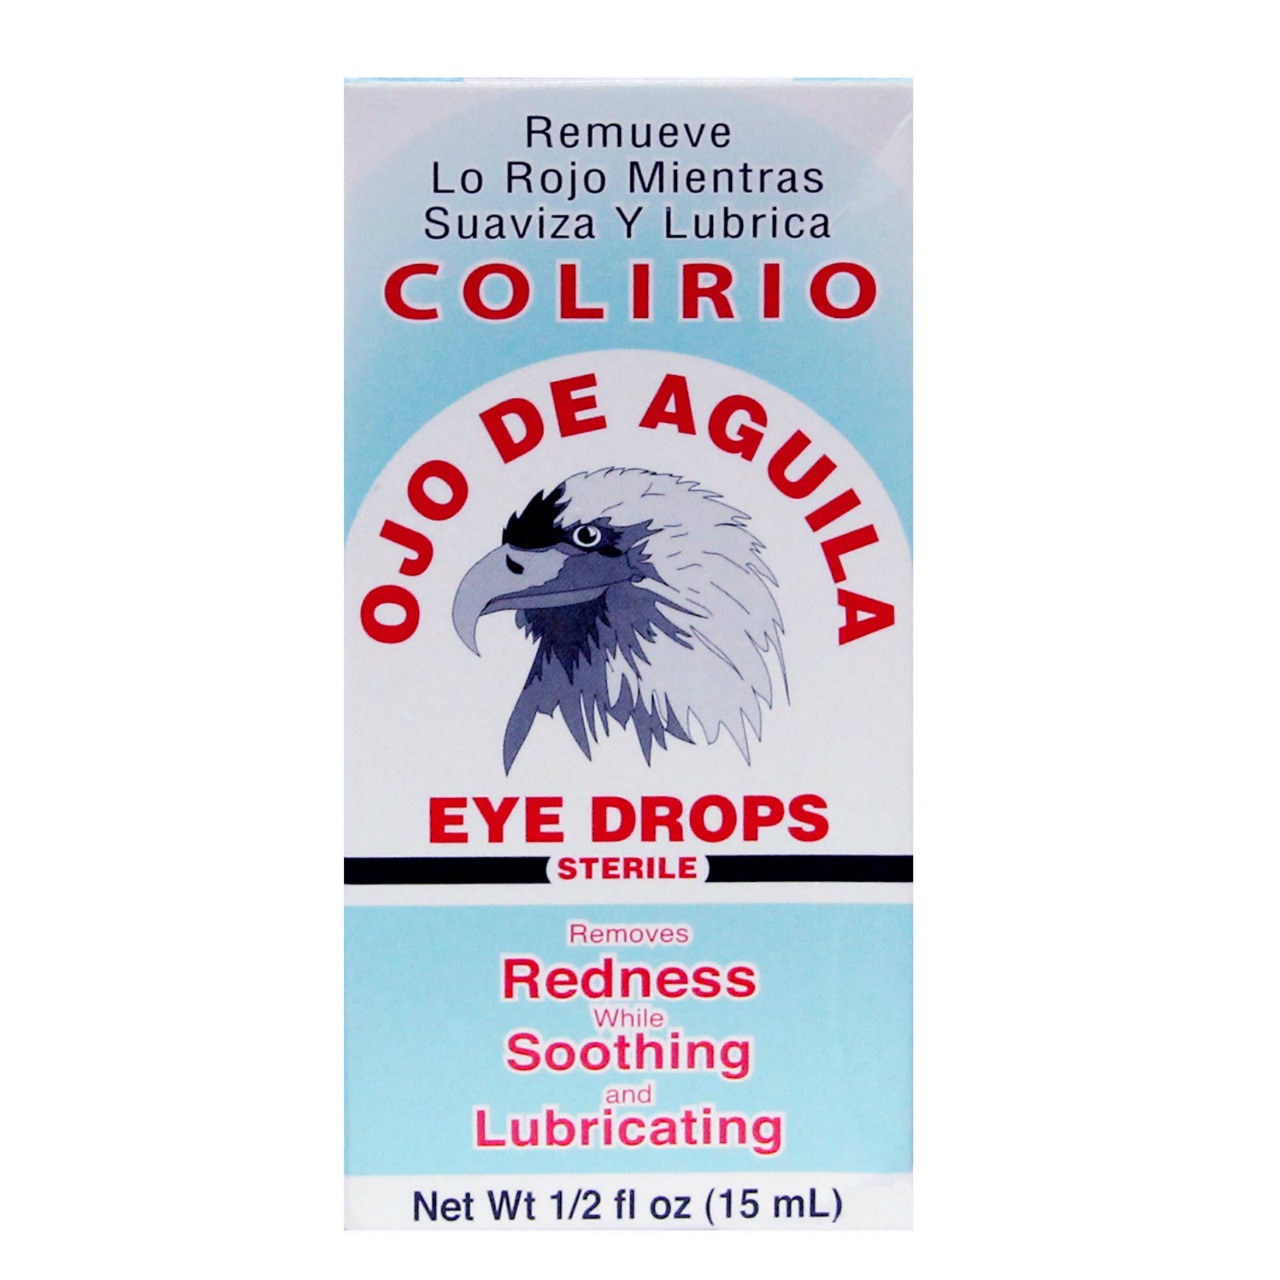 Colirio Ojo de Aguila, Eye Drops, Sterile, Net. Wt. 1/2 Fl. Oz. (15ml) –  